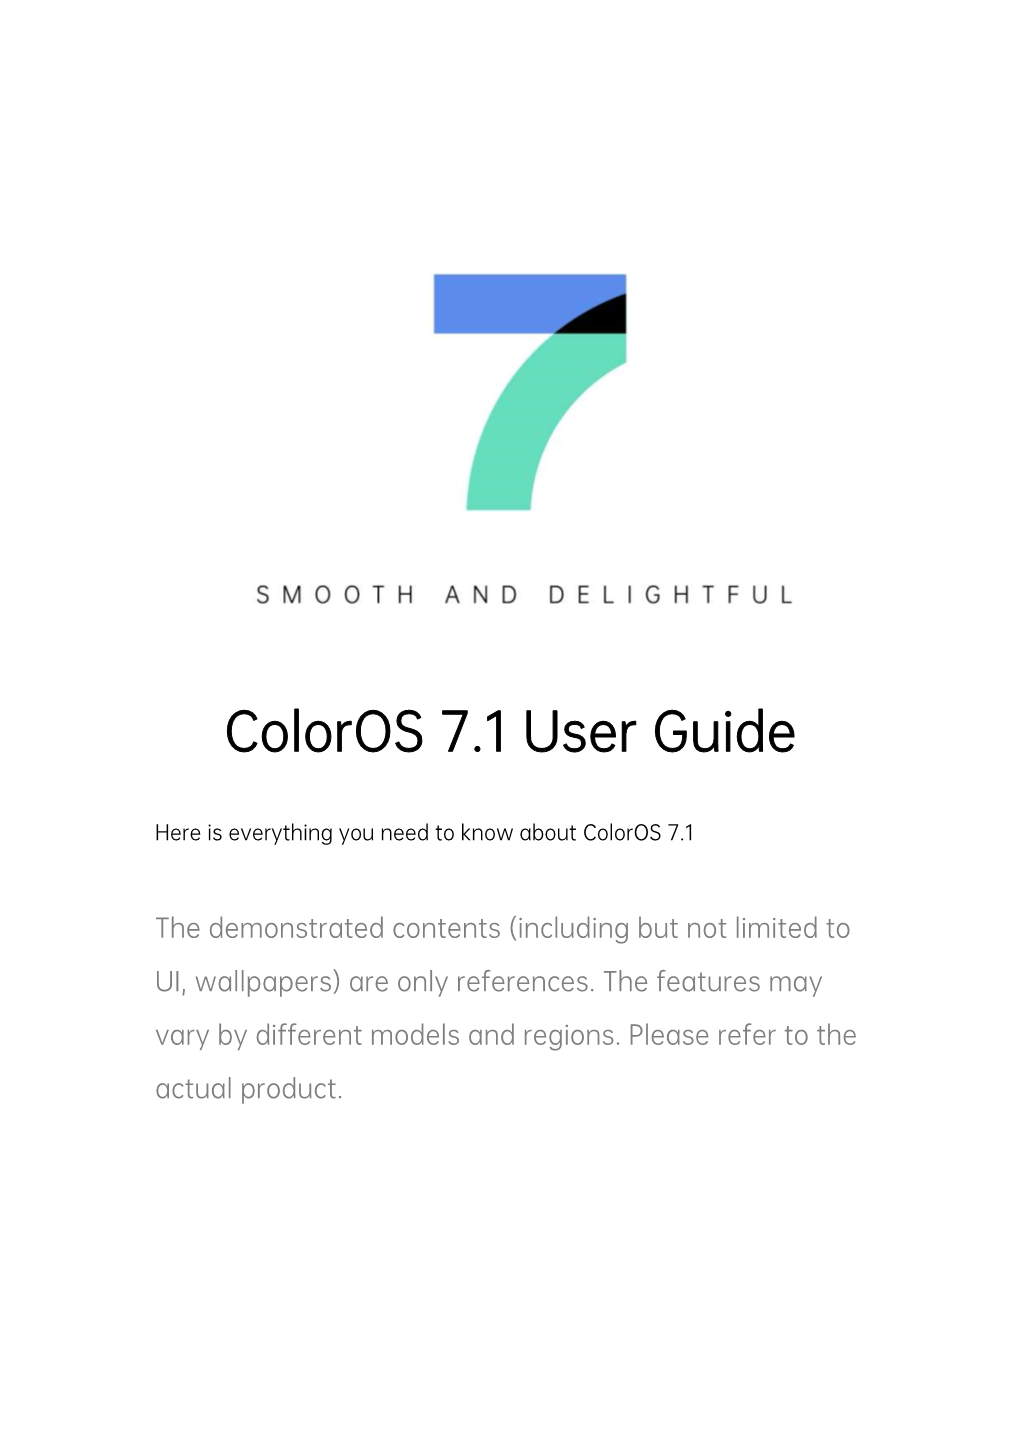 Coloros 7.1 User Guide